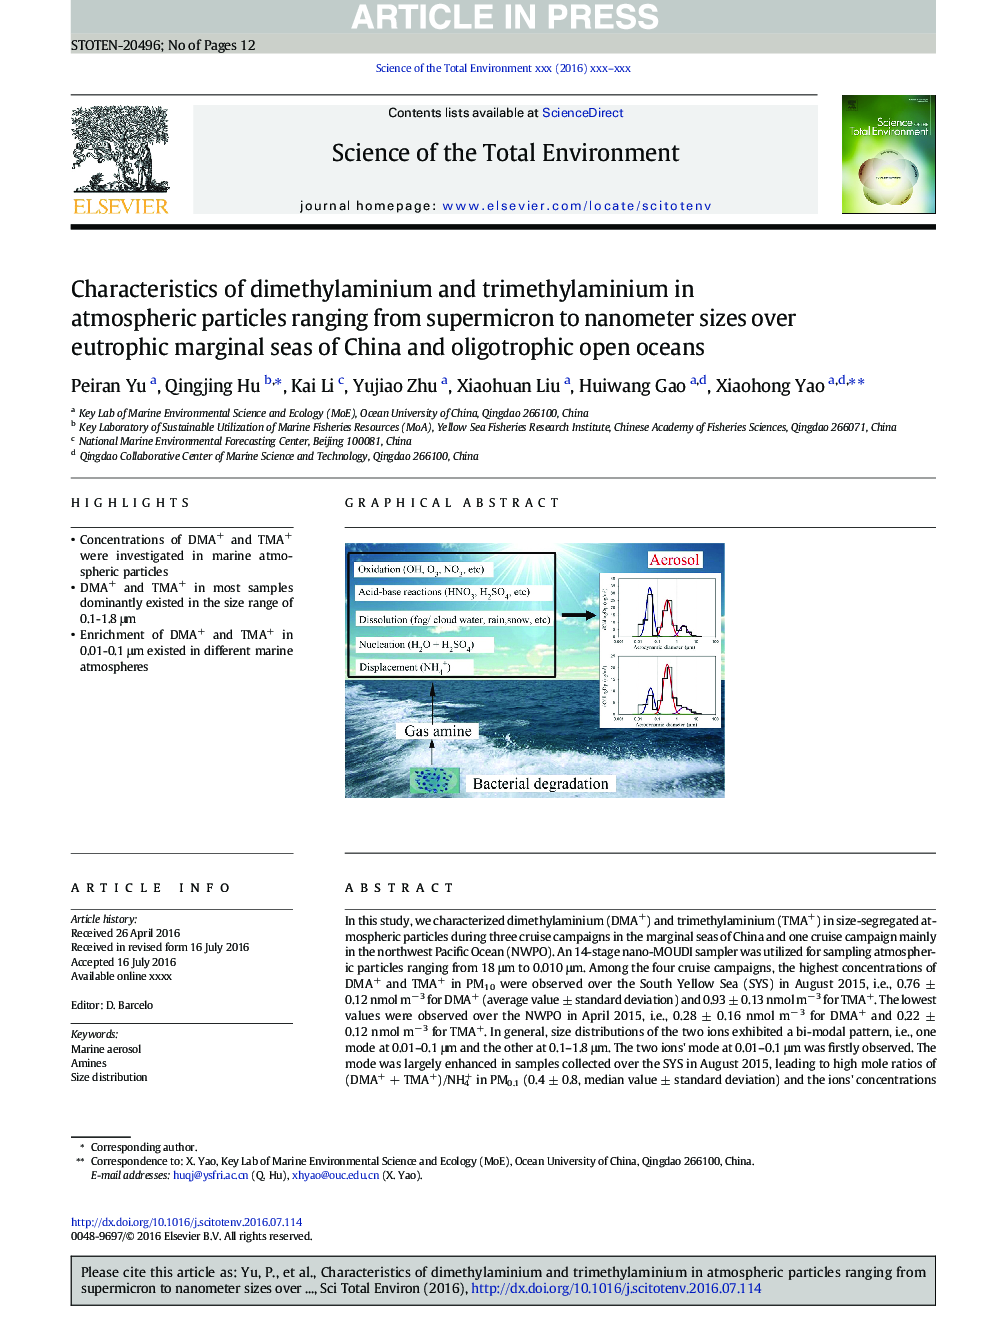 Characteristics of dimethylaminium and trimethylaminium in atmospheric particles ranging from supermicron to nanometer sizes over eutrophic marginal seas of China and oligotrophic open oceans